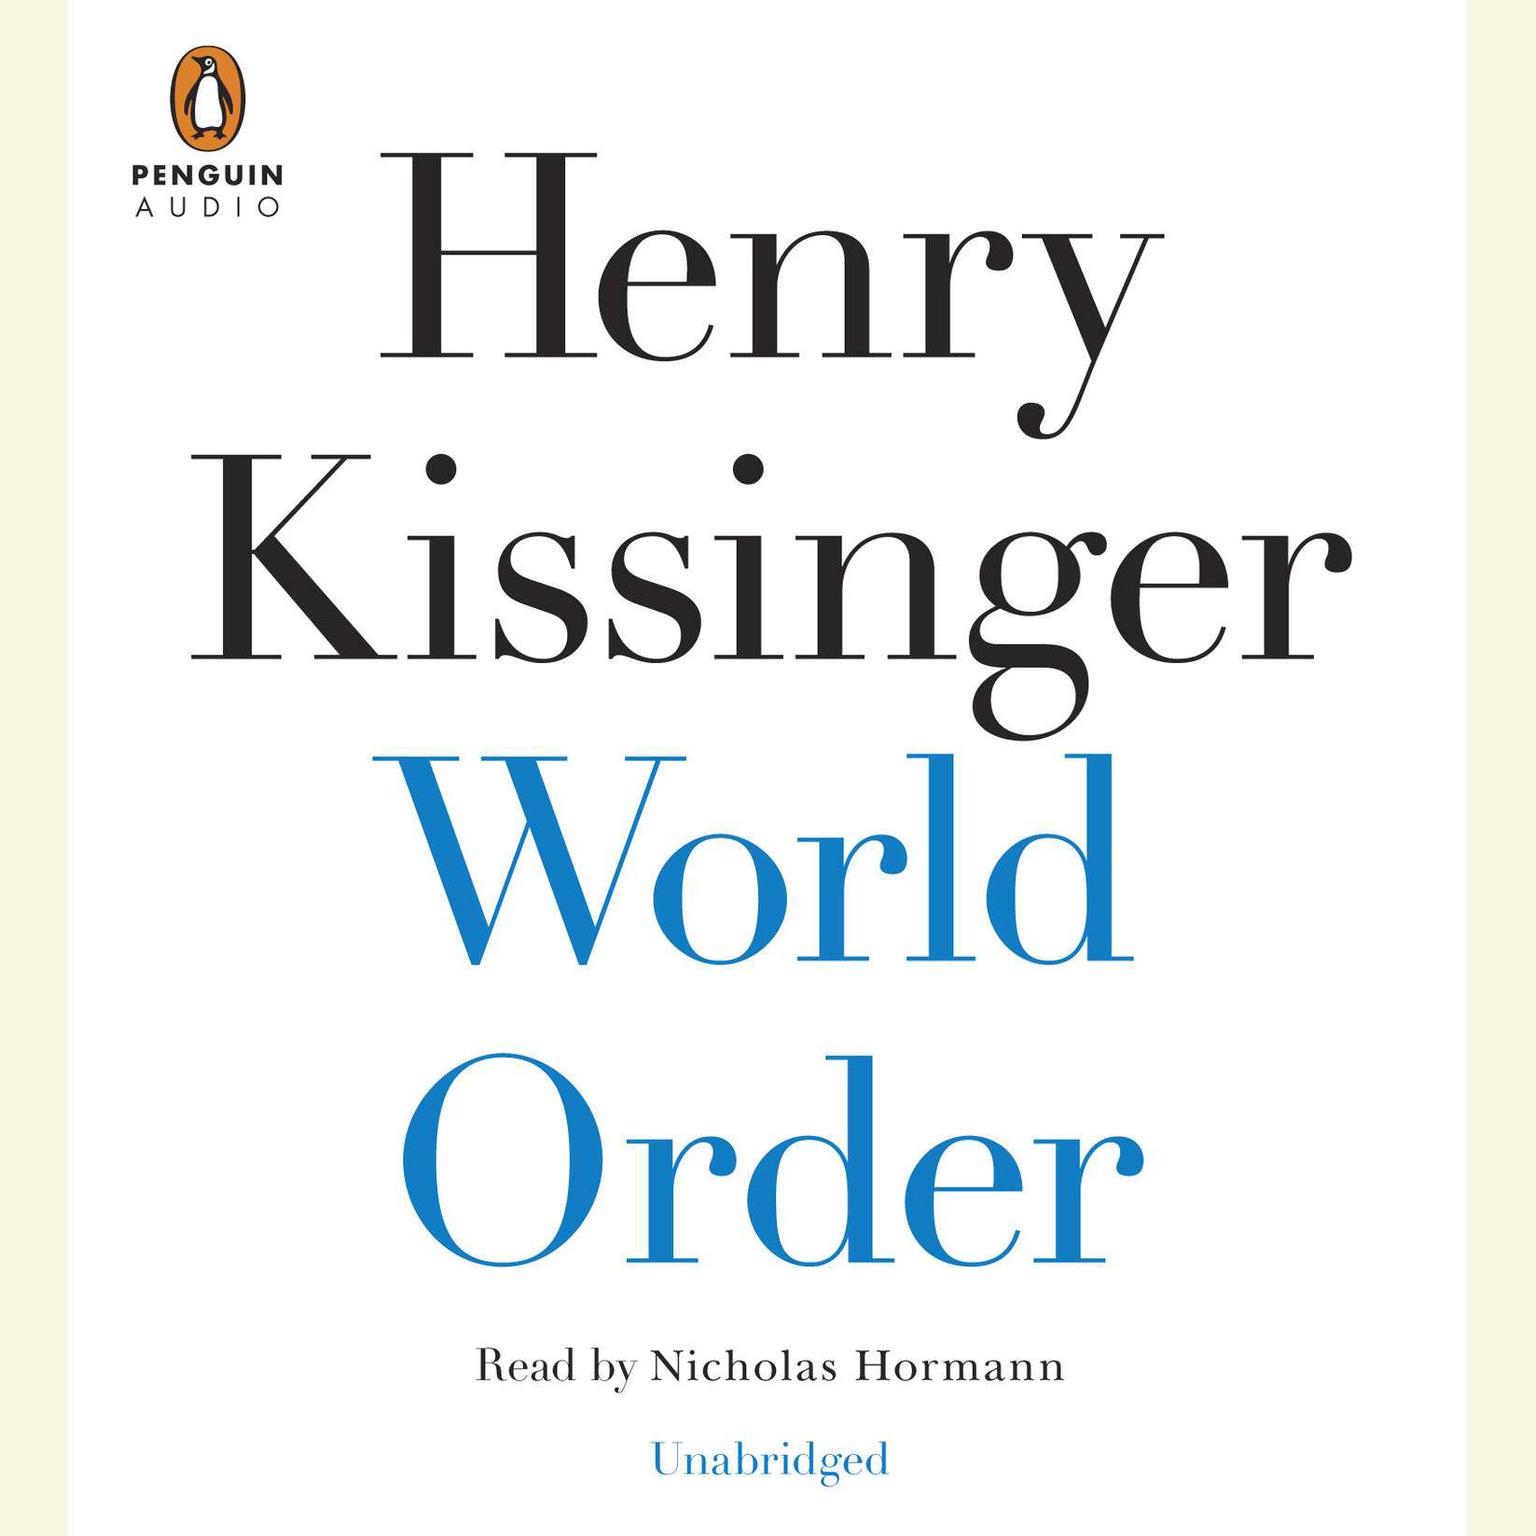 World Order Audiobook, by Henry A. Kissinger